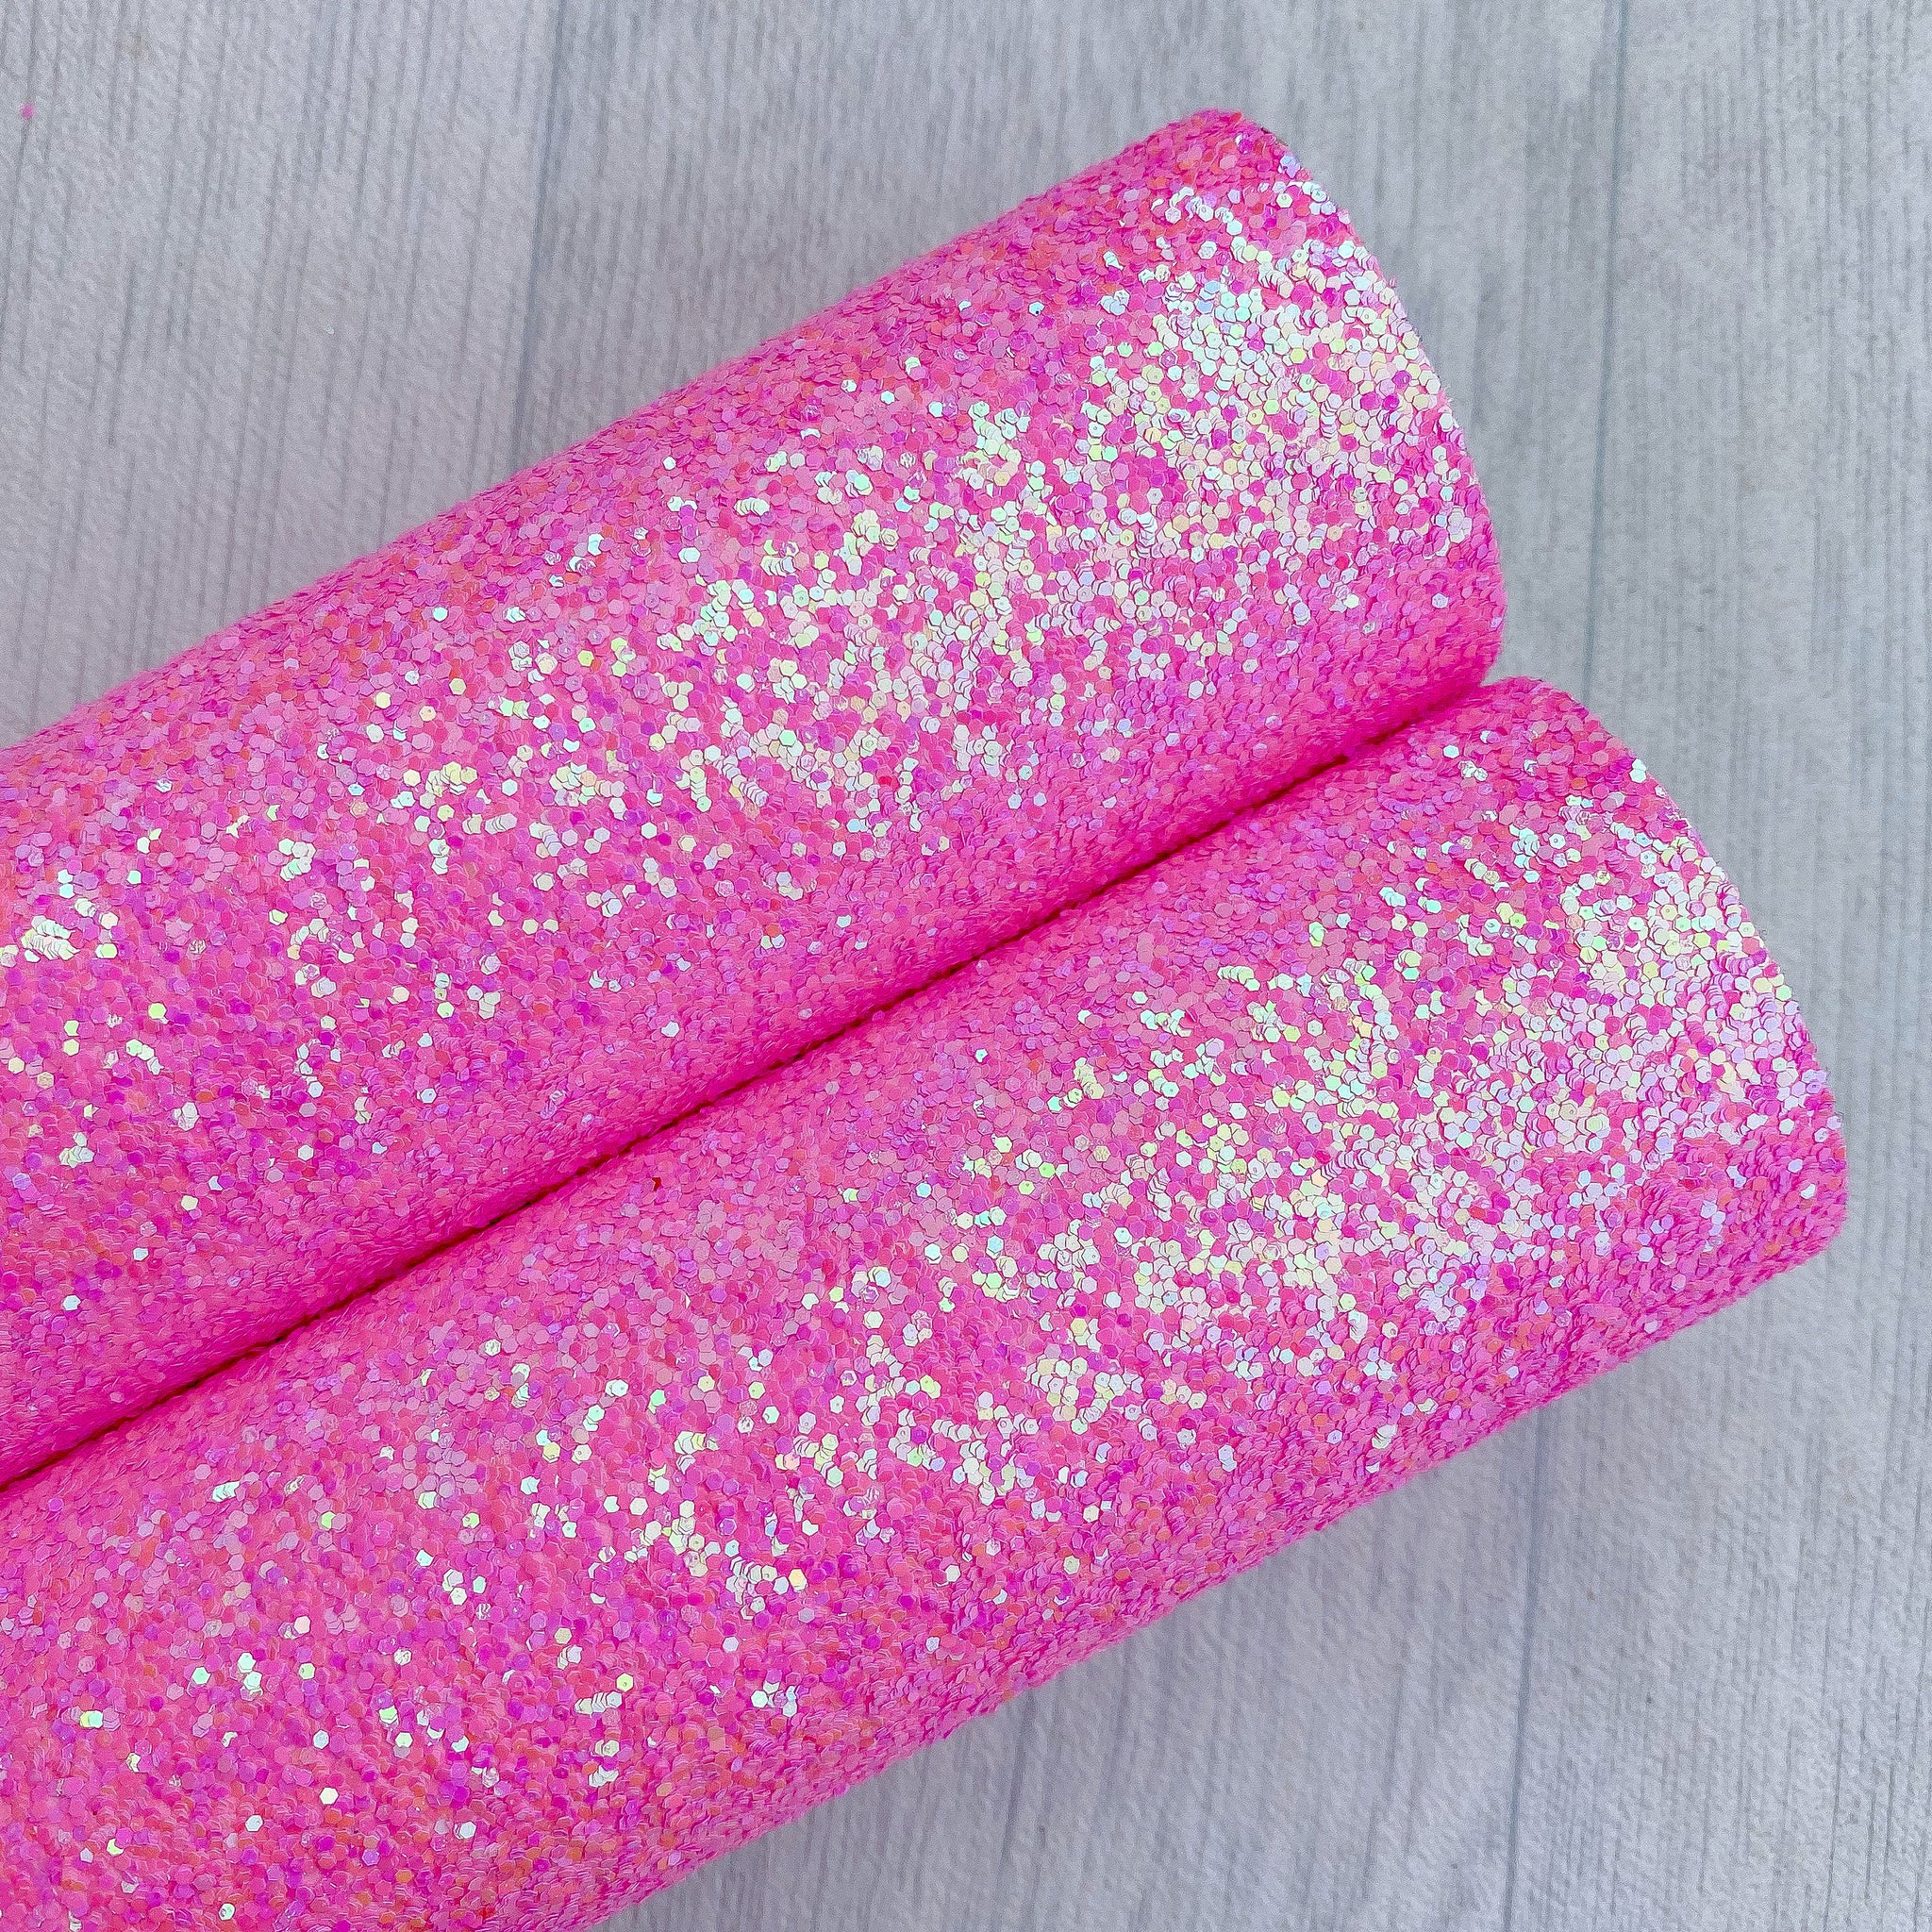 Neon pink Chunky Glitter fabric A4 sheet bow crafts supplies glitter material wallpaper maker hair bows 